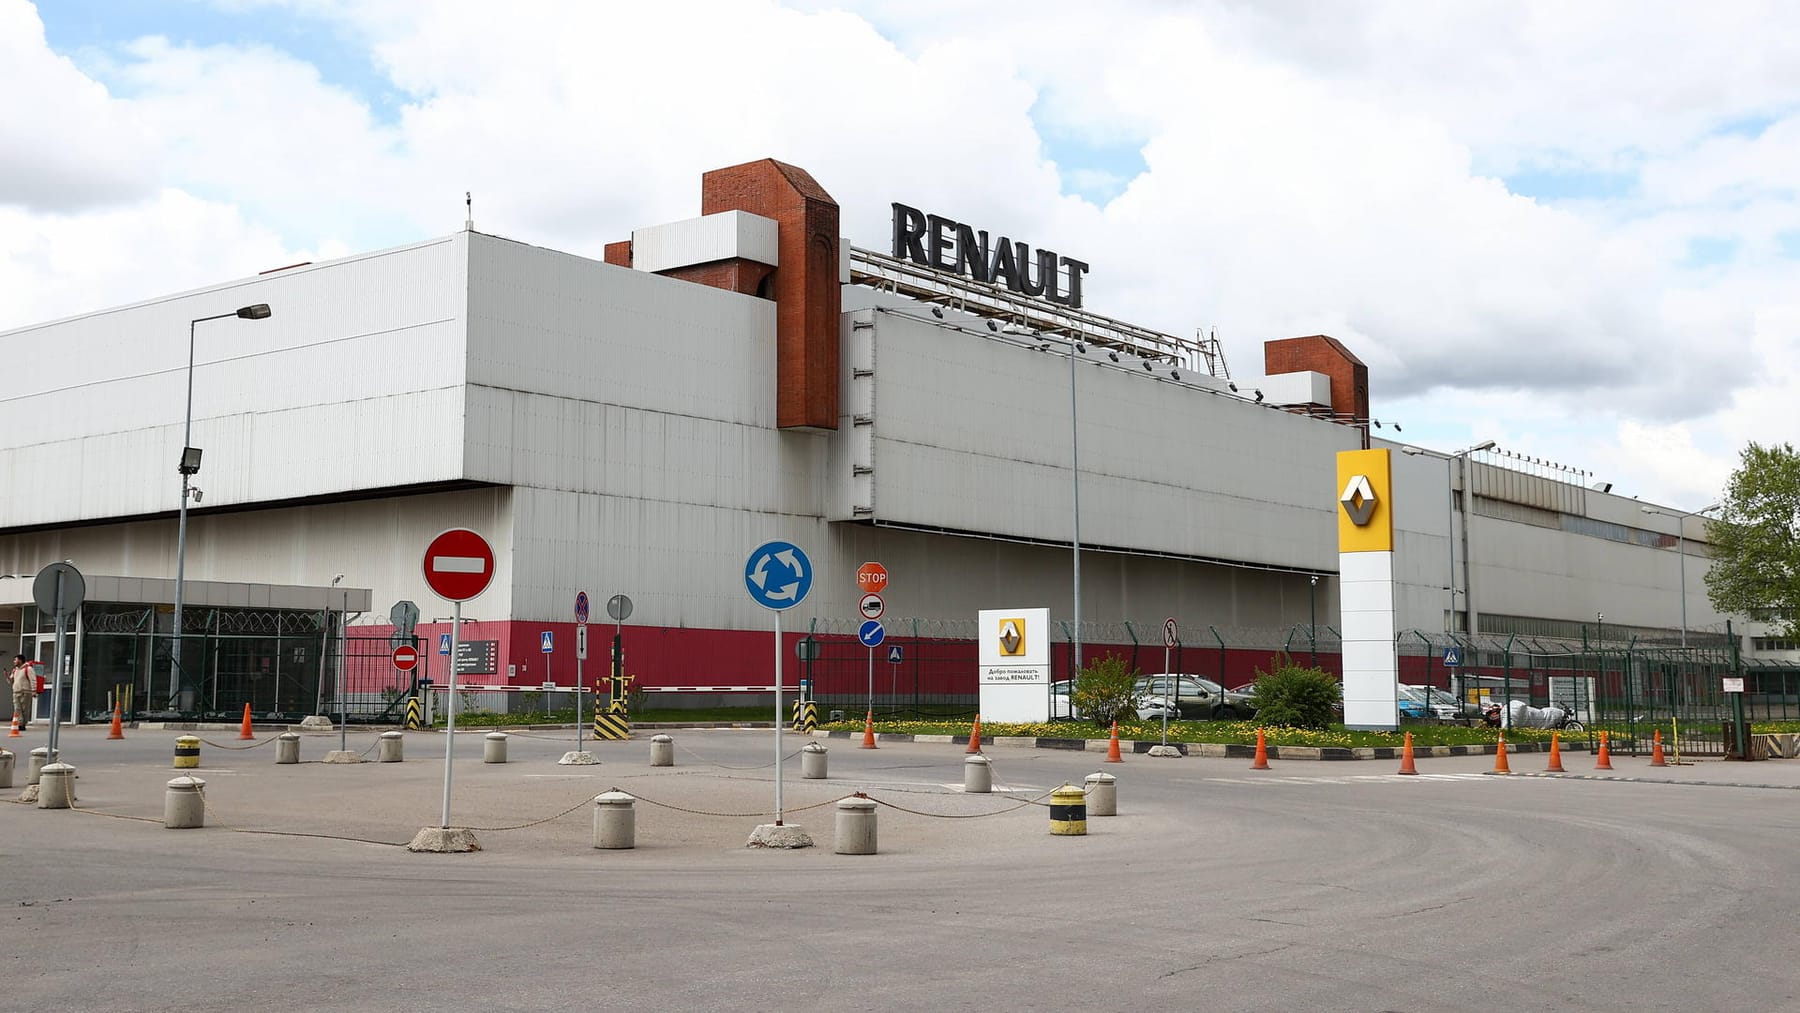 Renault sprzedaje rosyjski biznes za 1 rubel